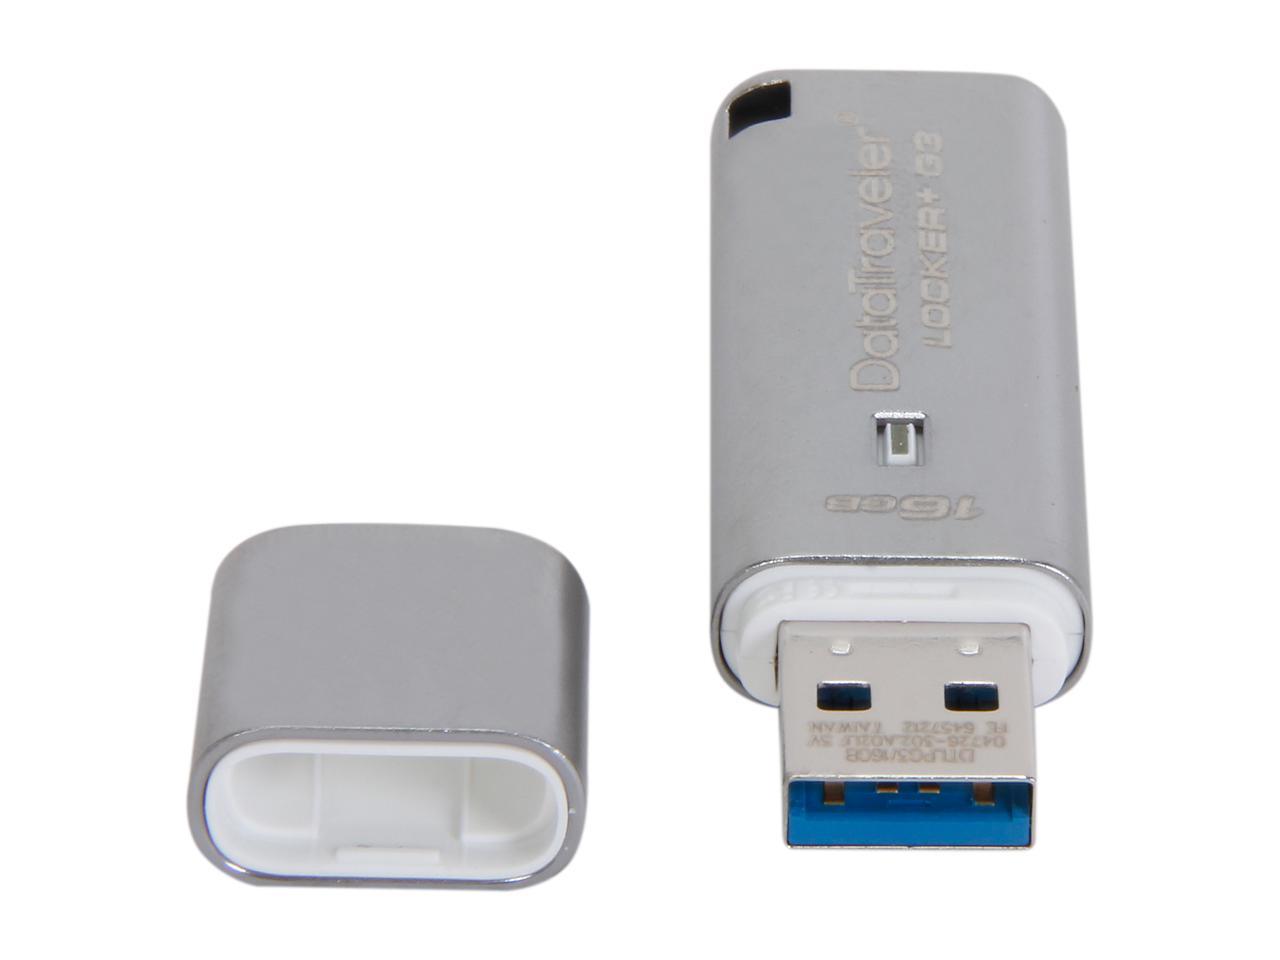 Kingston 16GB Data Traveler Locker + G3, USB 3.0 Flash Drive with Personal Data Security & Automatic Cloud Backup (DTLPG3/16GB)